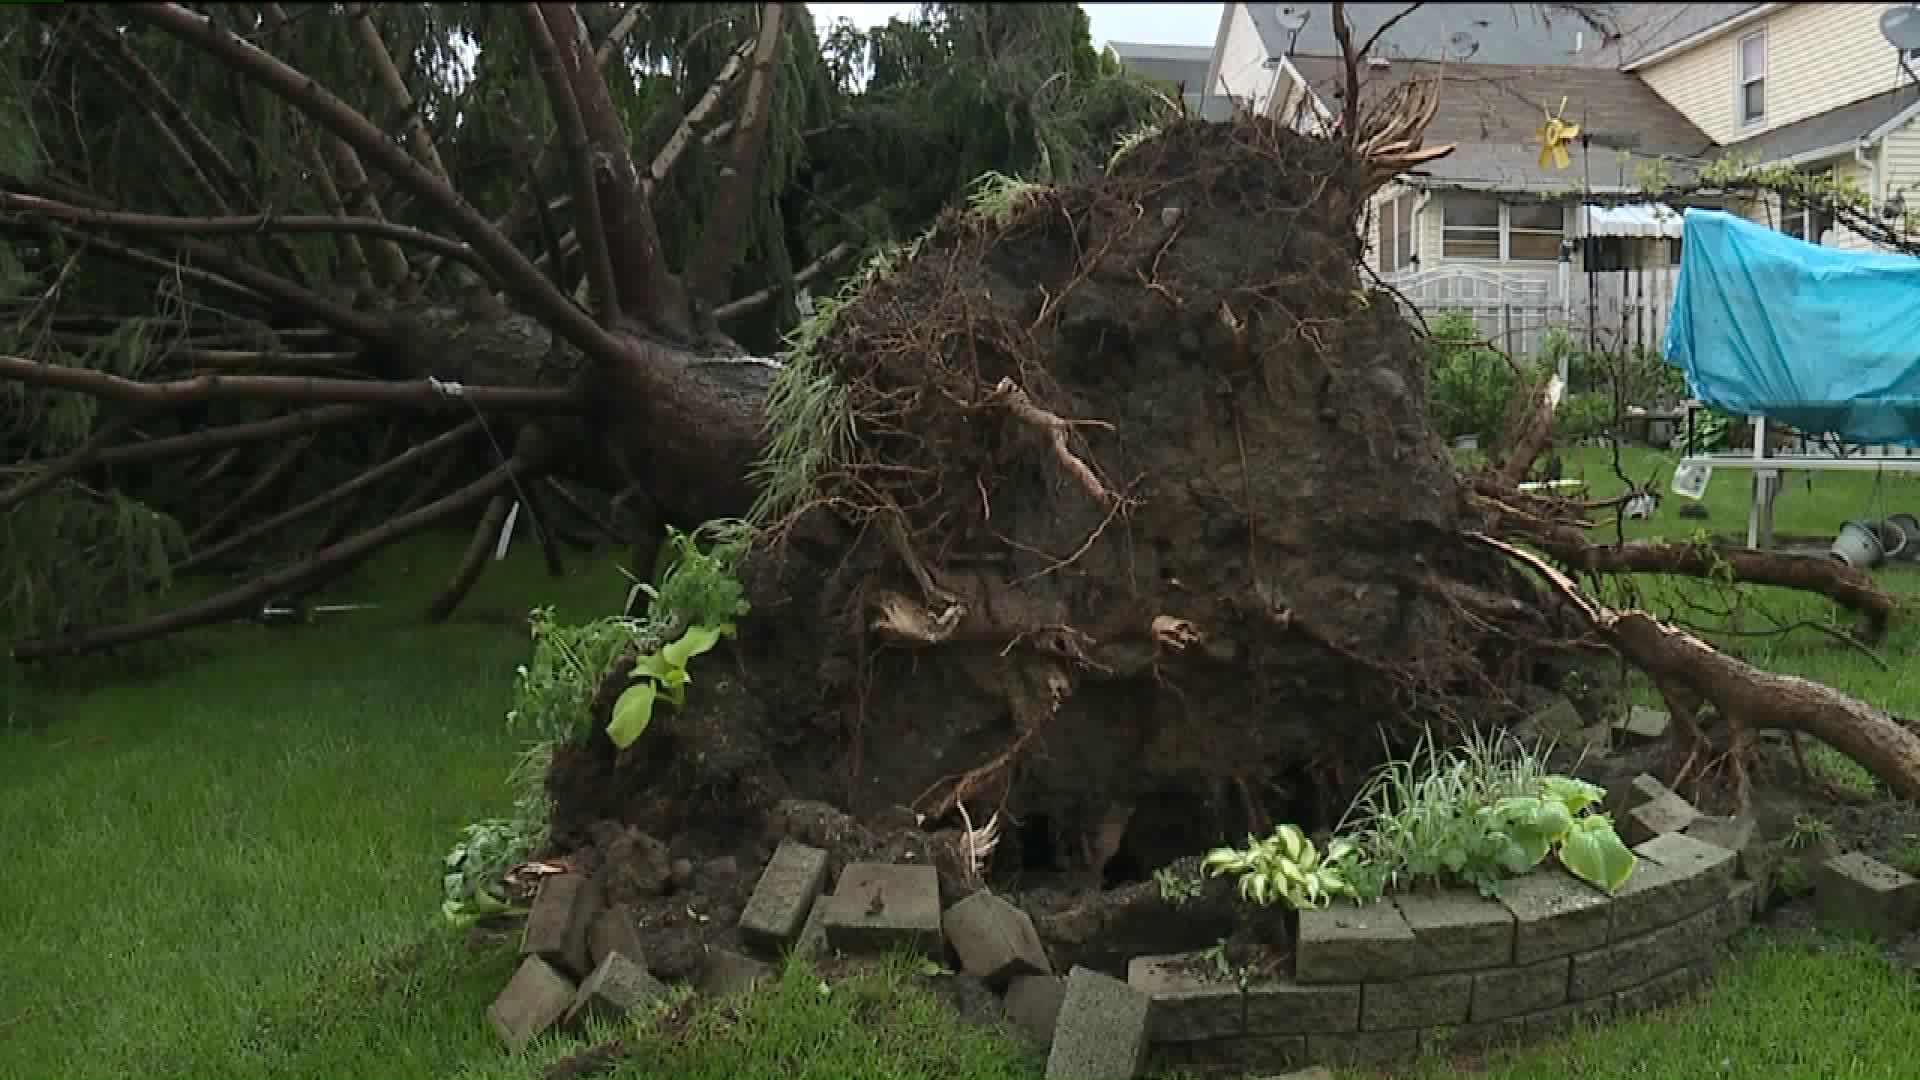 Luzerne County Neighborhood Heavily Damaged by Storm